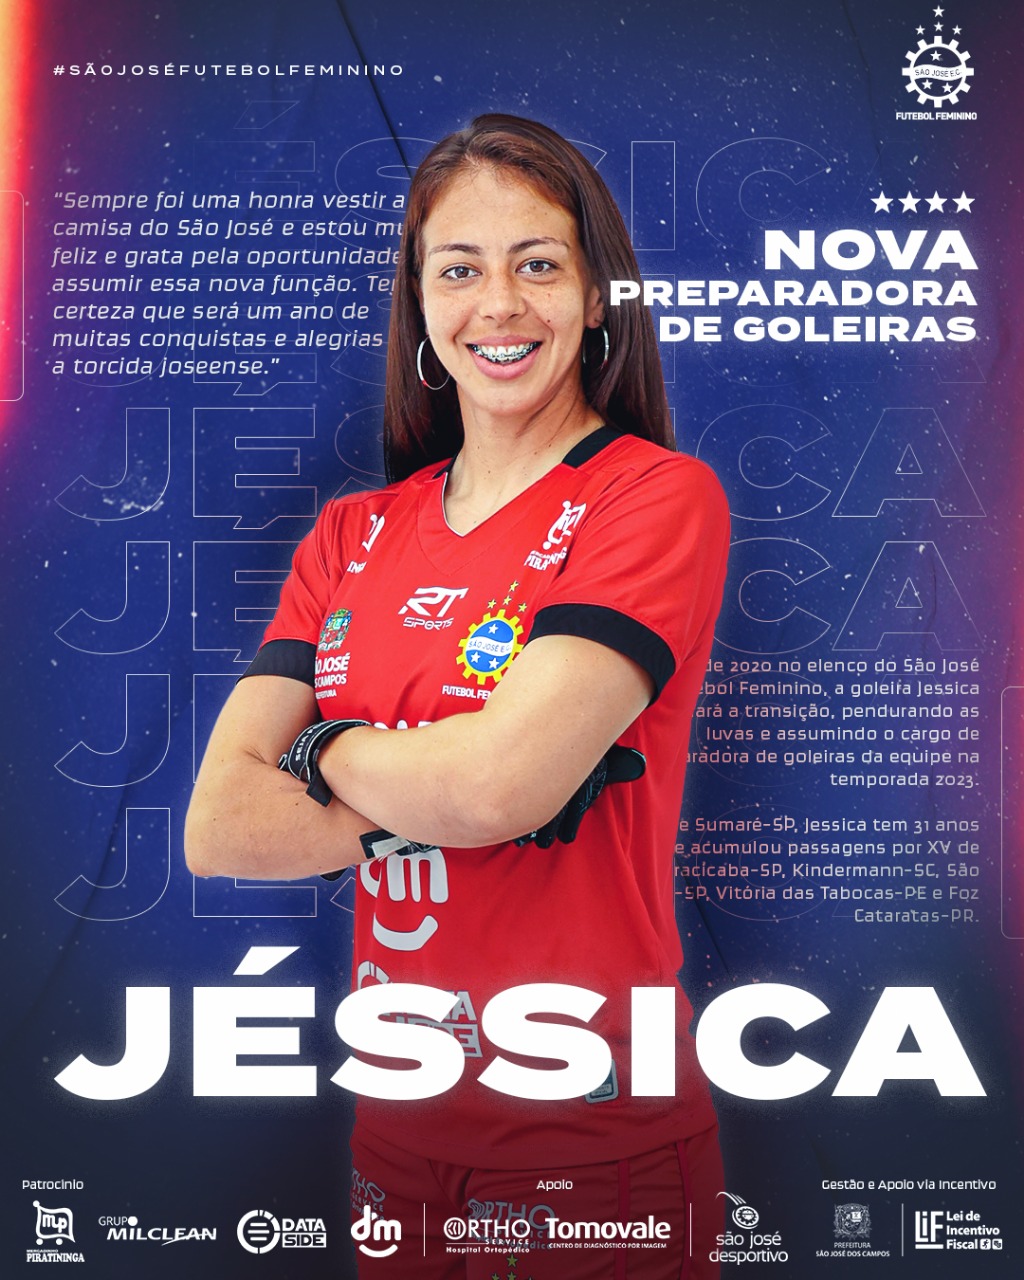 Jessica (#12 Sao Jose EC) during the Campeonato Paulista Feminino